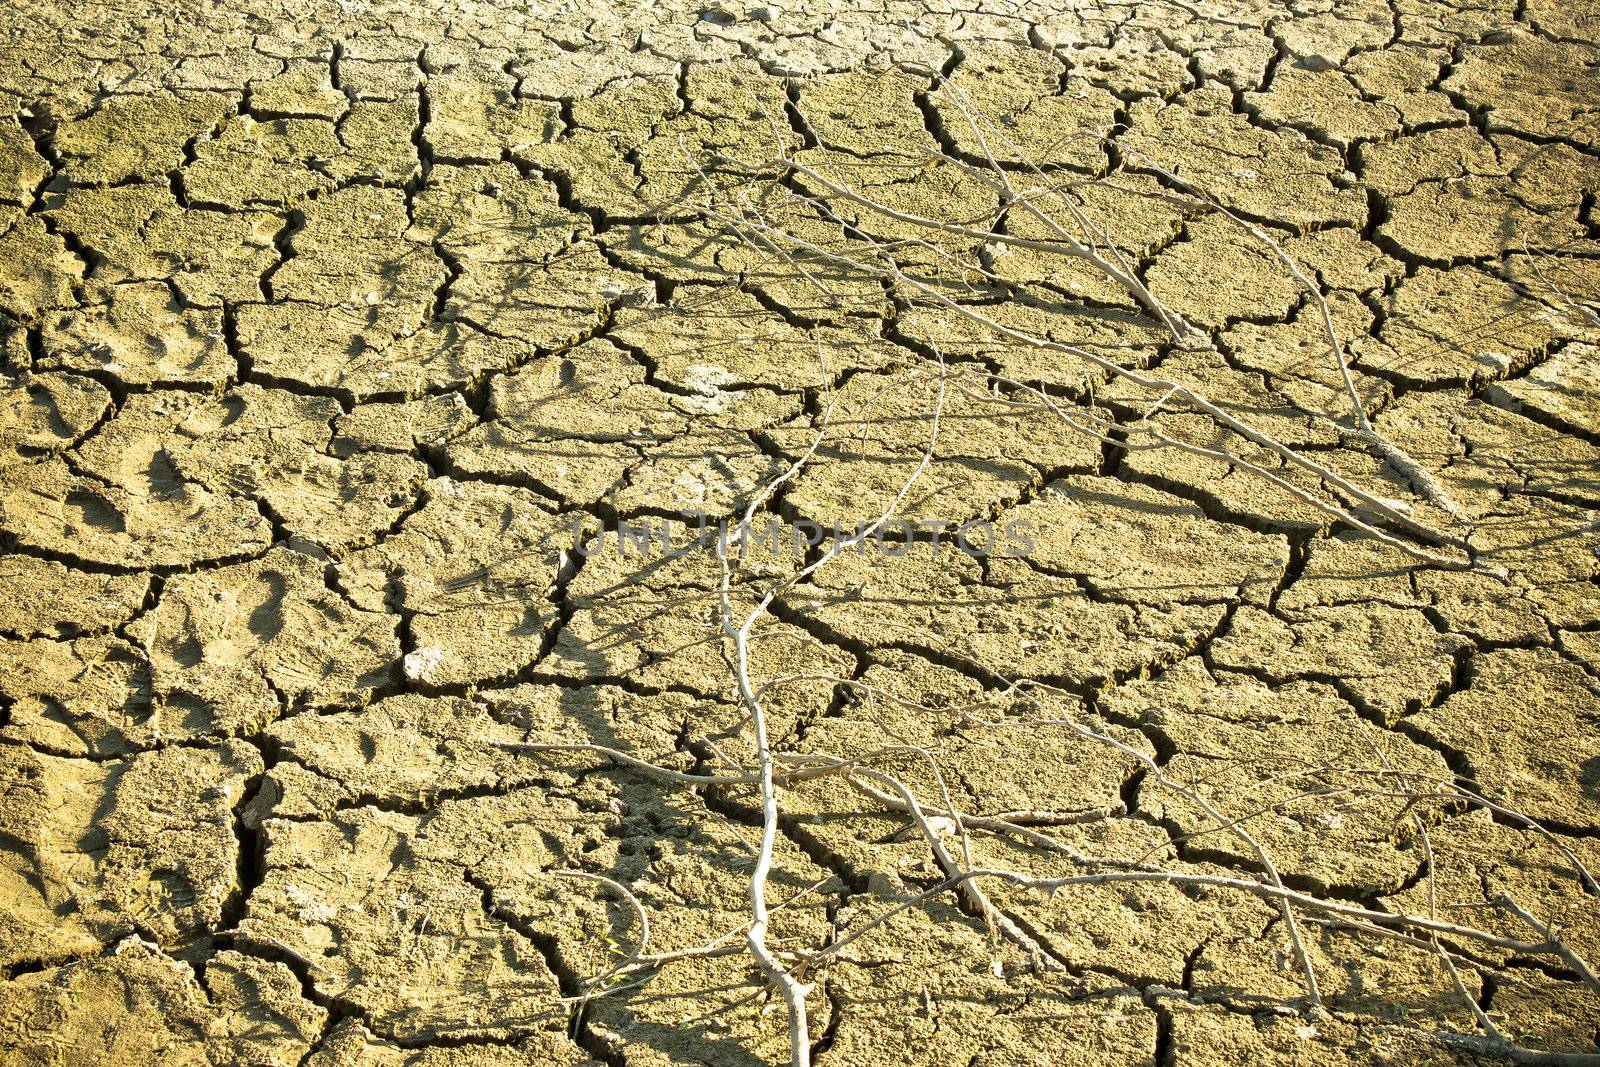 Dry soil in lake bottom during dryness season, Croatia